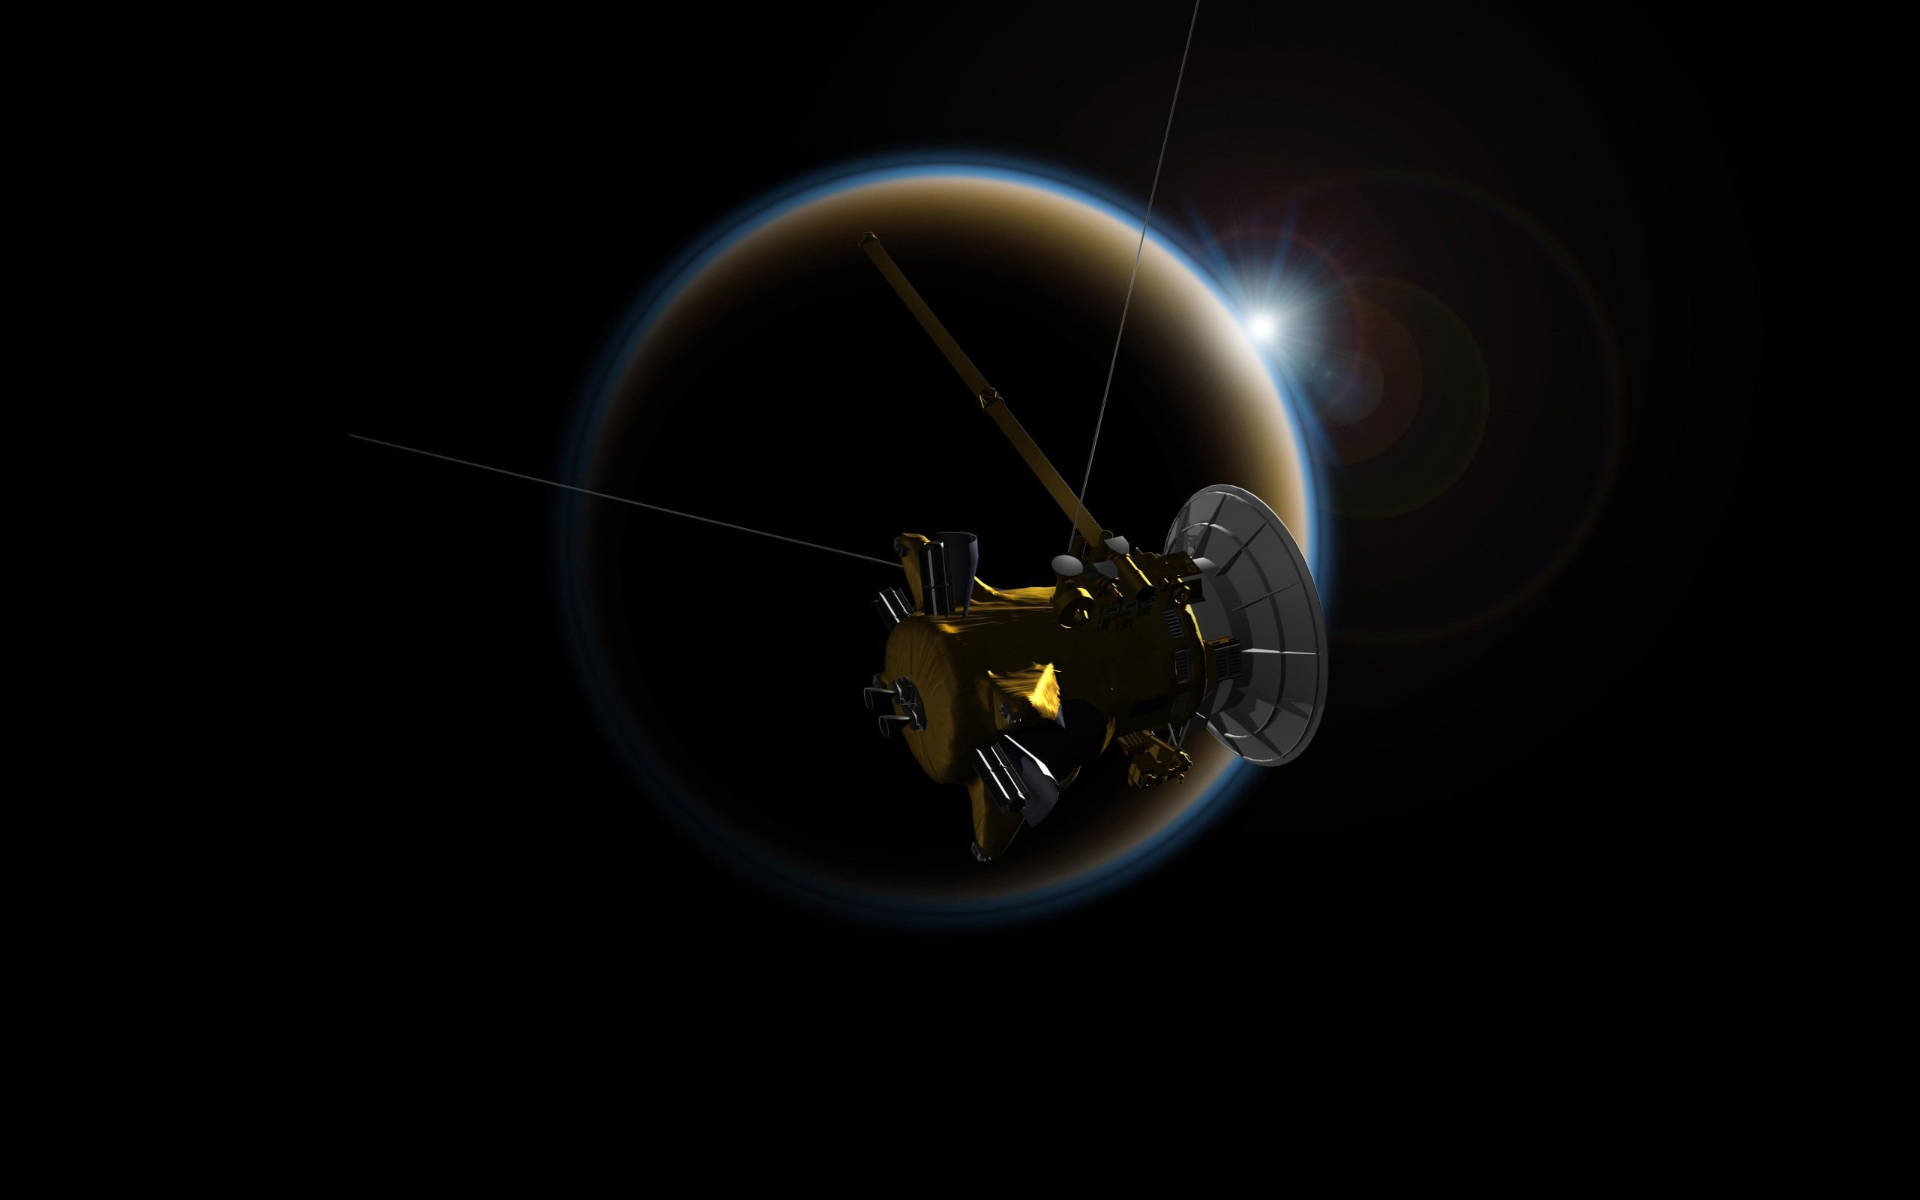 Satellite On Black Planet